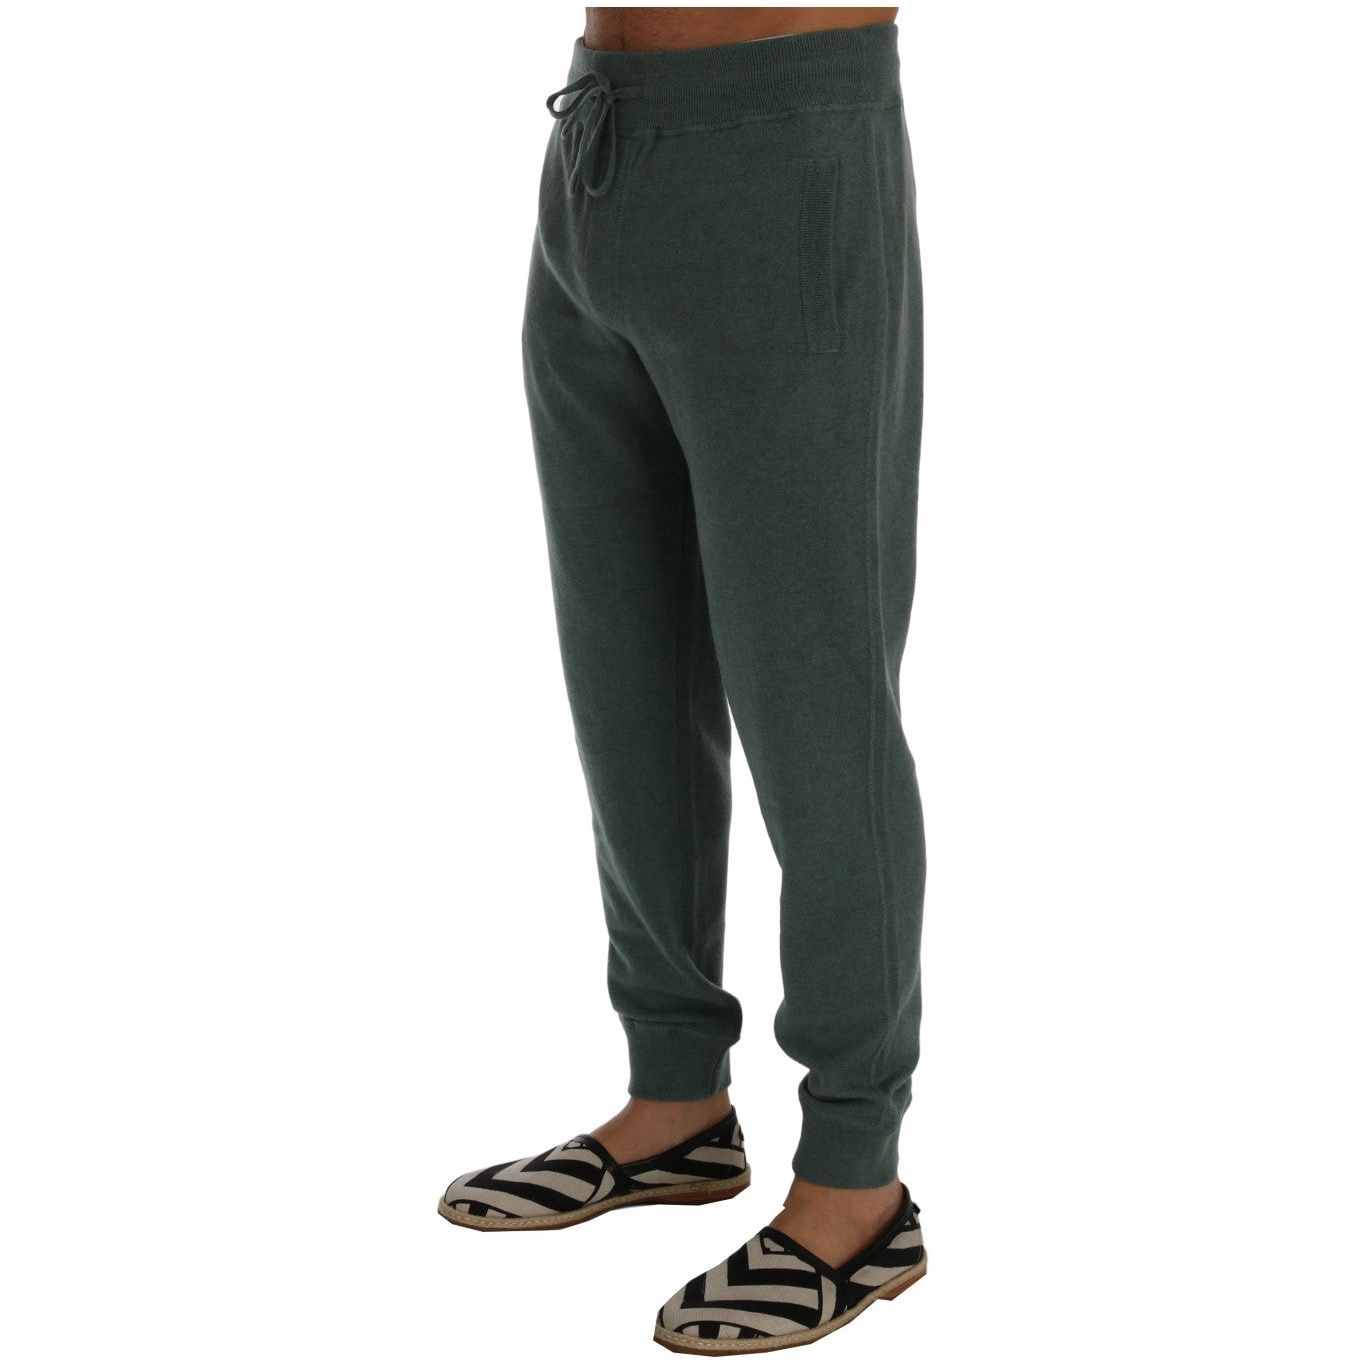 Dolce & Gabbana Elegant Green Cashmere Sport Pants green-cashmere-training-pants 346330-green-cashmere-training-pants-1.jpg